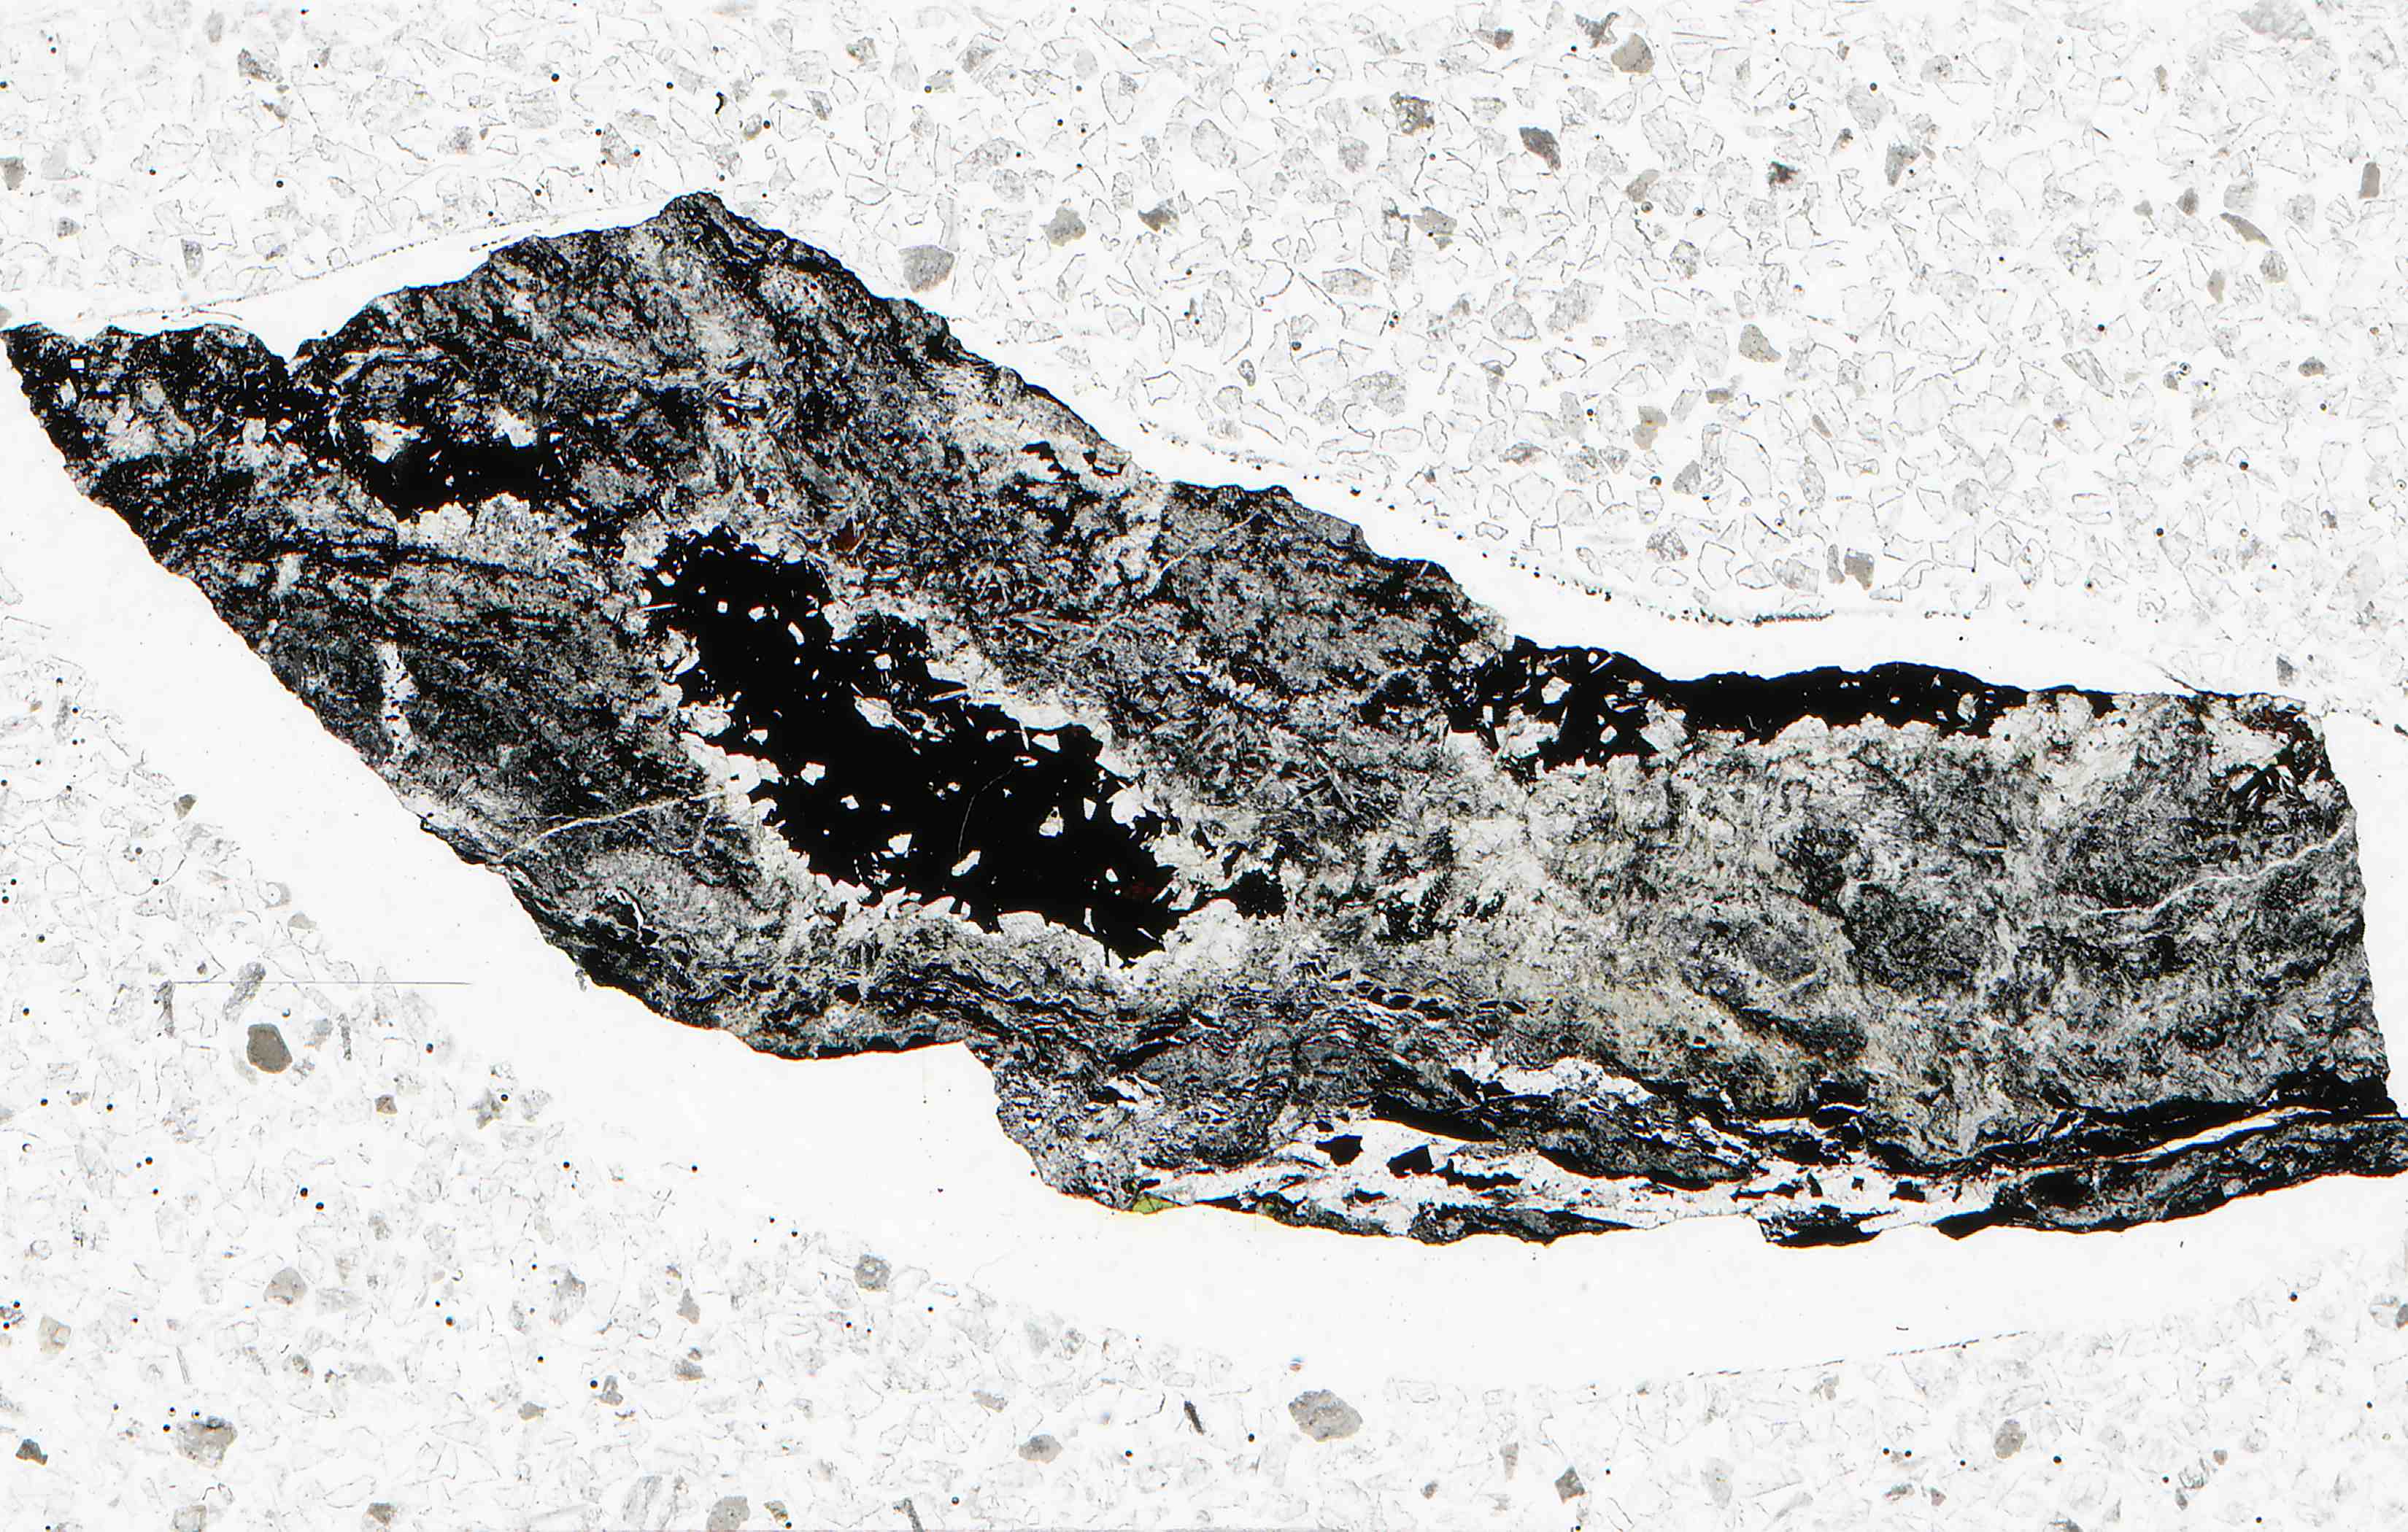 Tetetice near Klatovy Czech Republic goldmanite and mukhinite in thin section